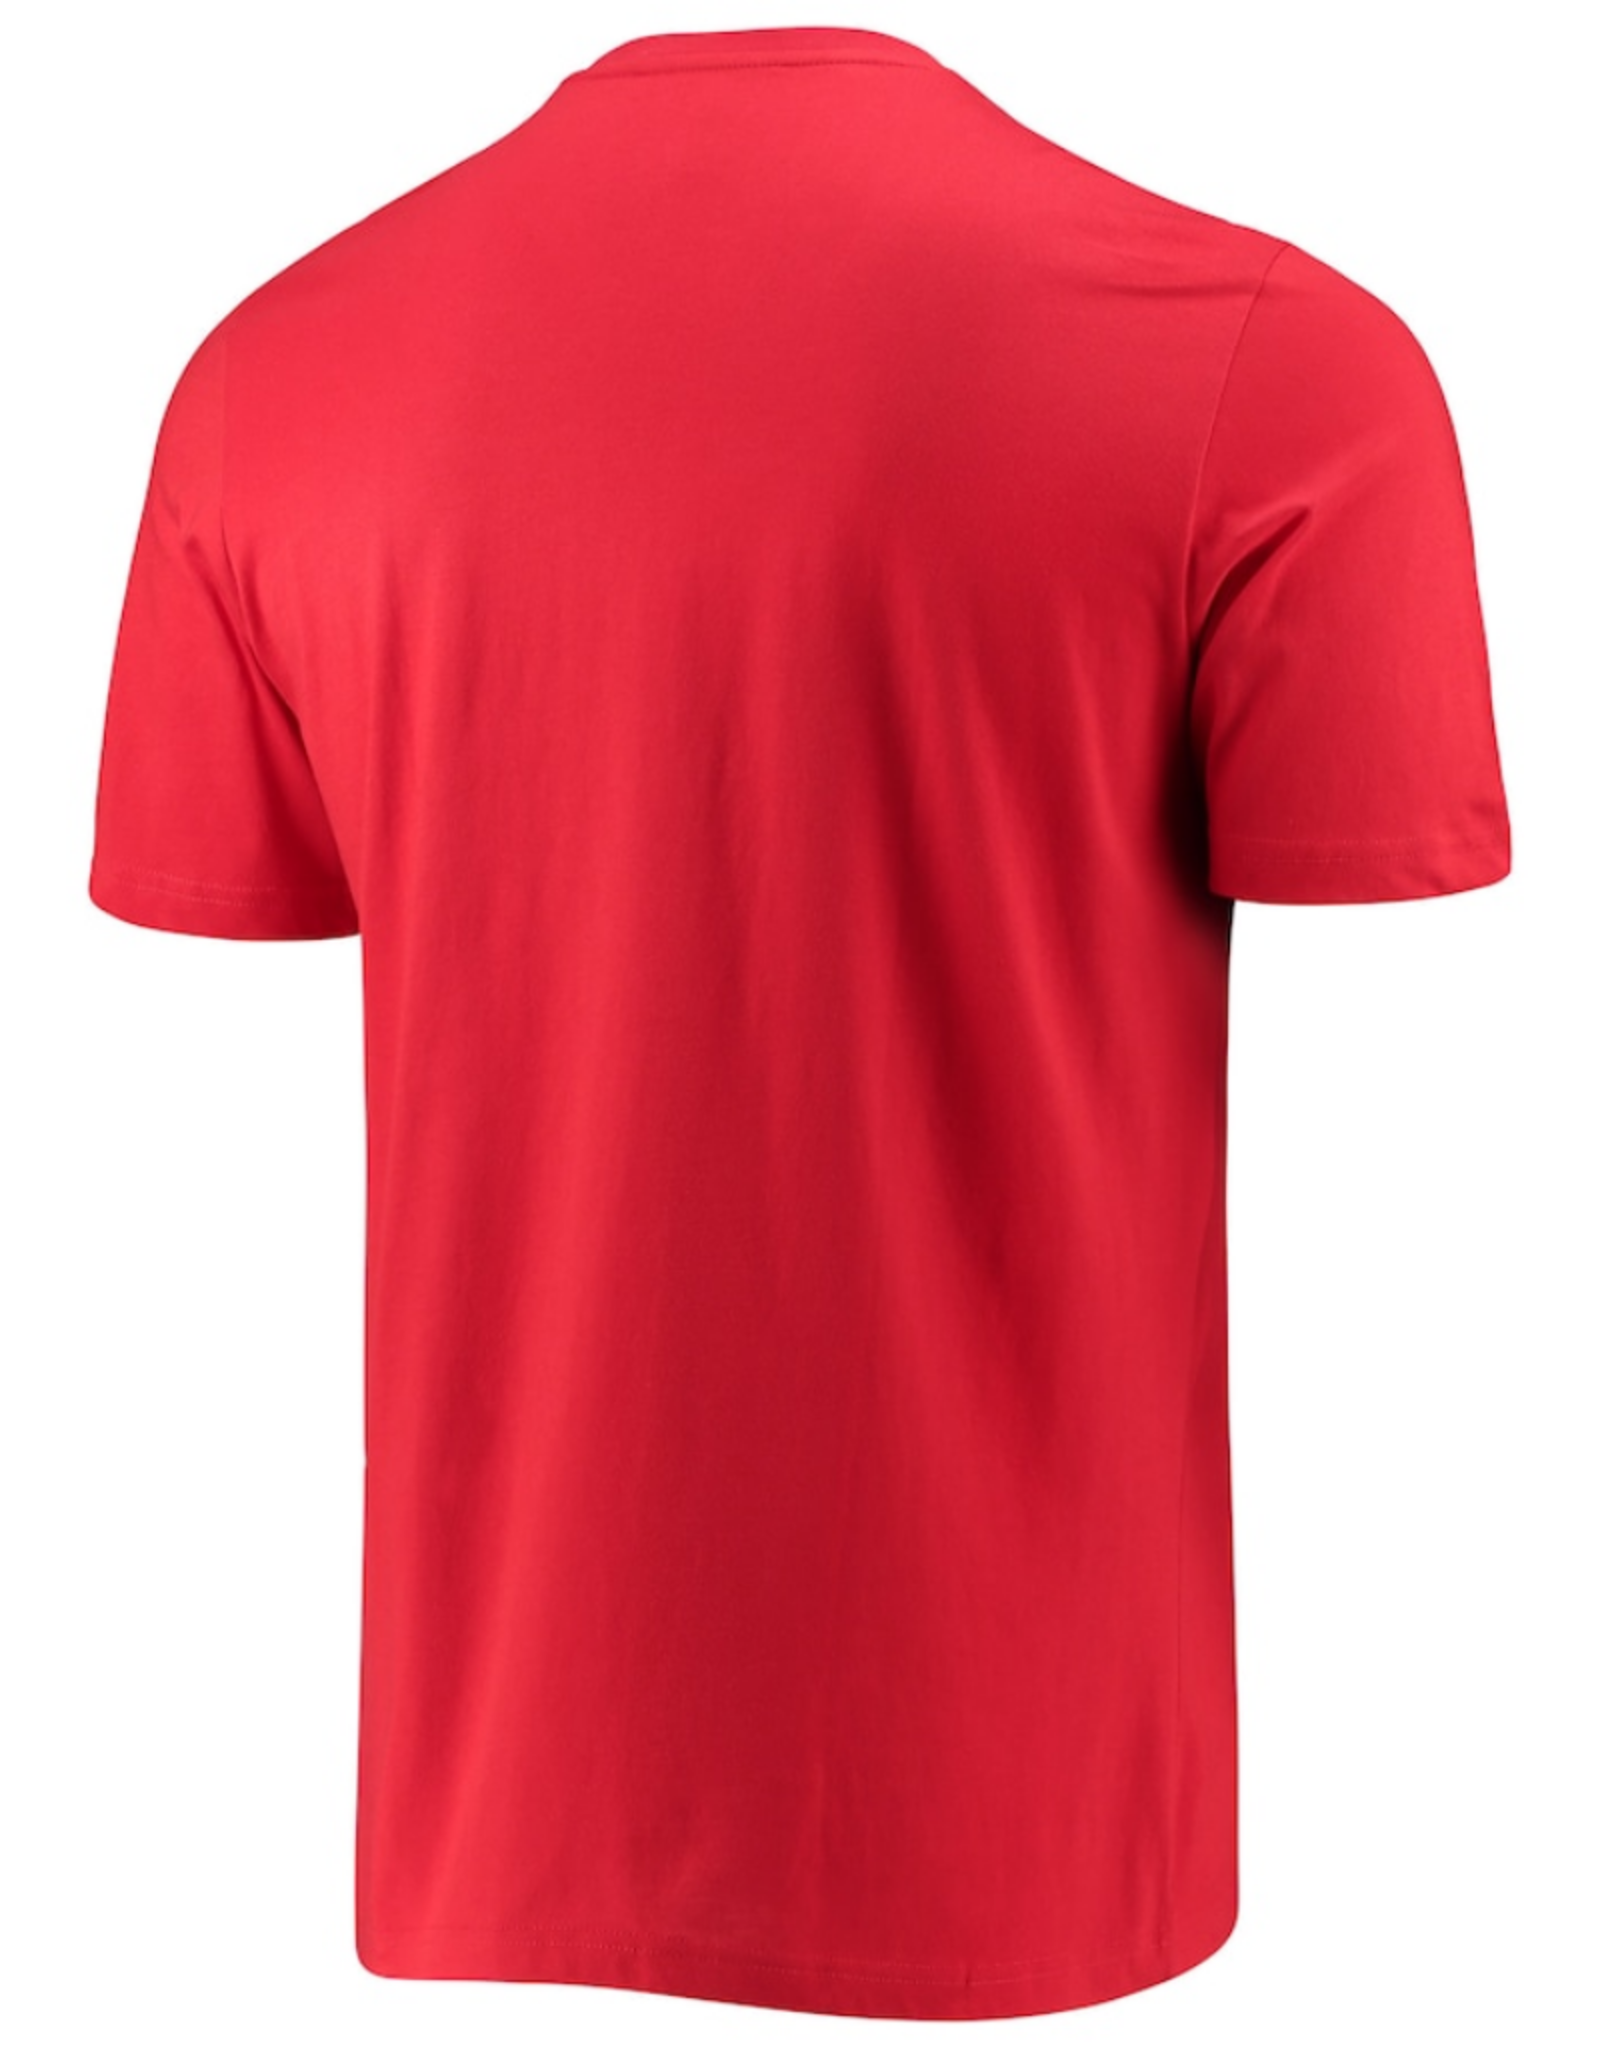 Adidas Adidas Men's '21 Soccer T-Shirt Arsenal Red